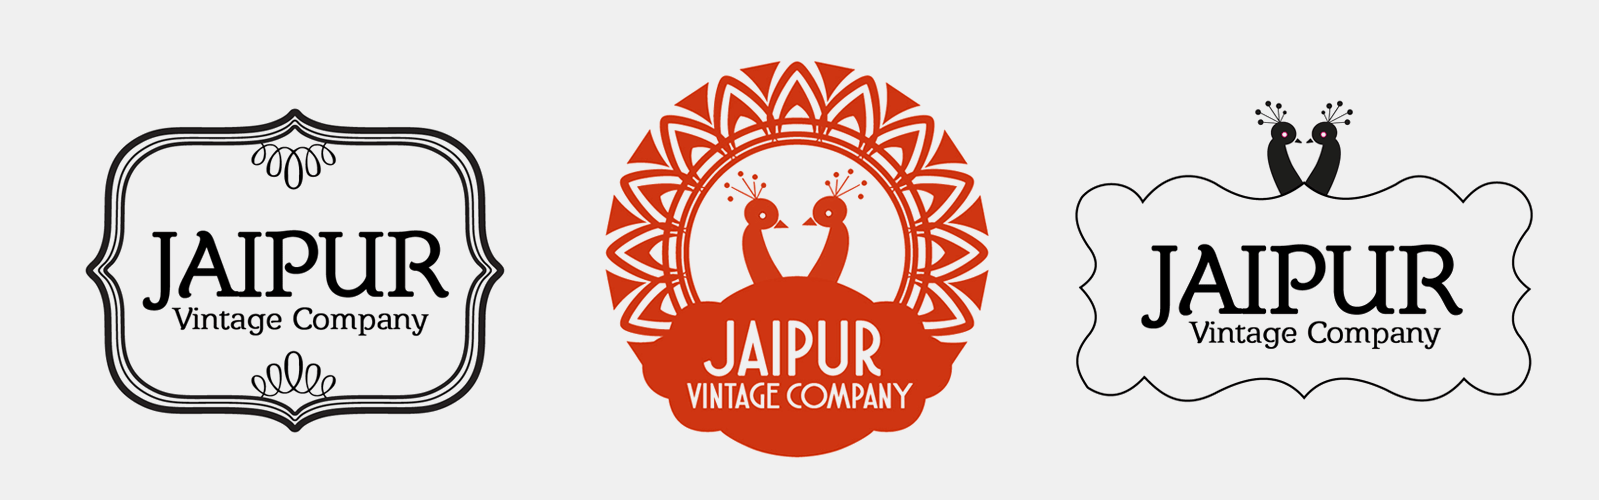 Jaipur Vintage Company